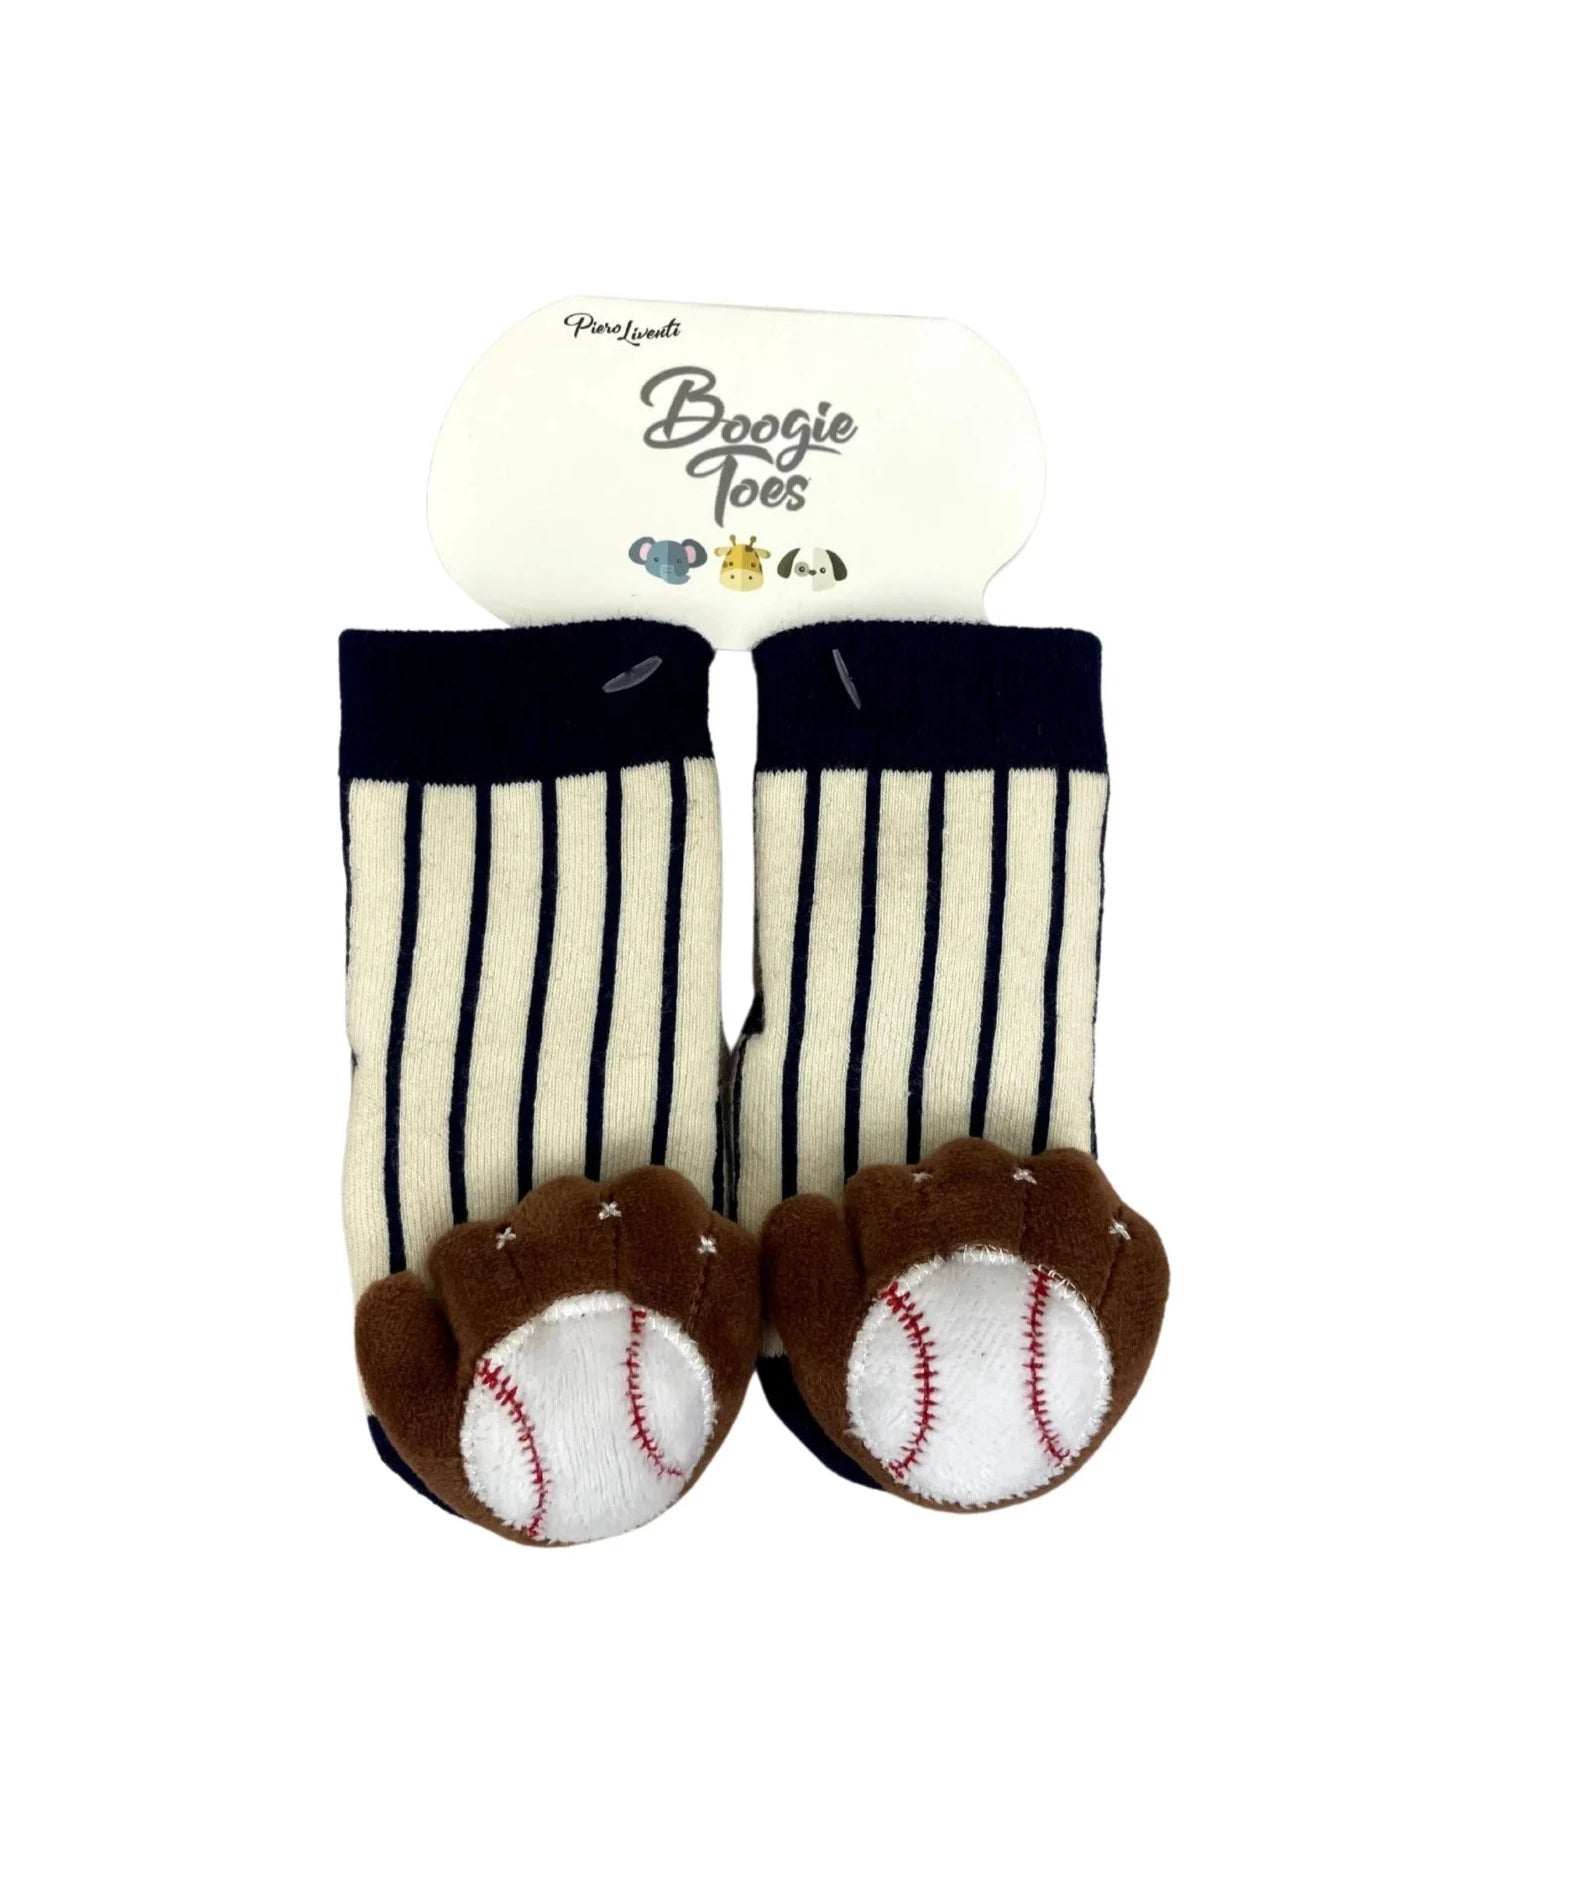 striped socks with baseball mitts and baseballs on toe